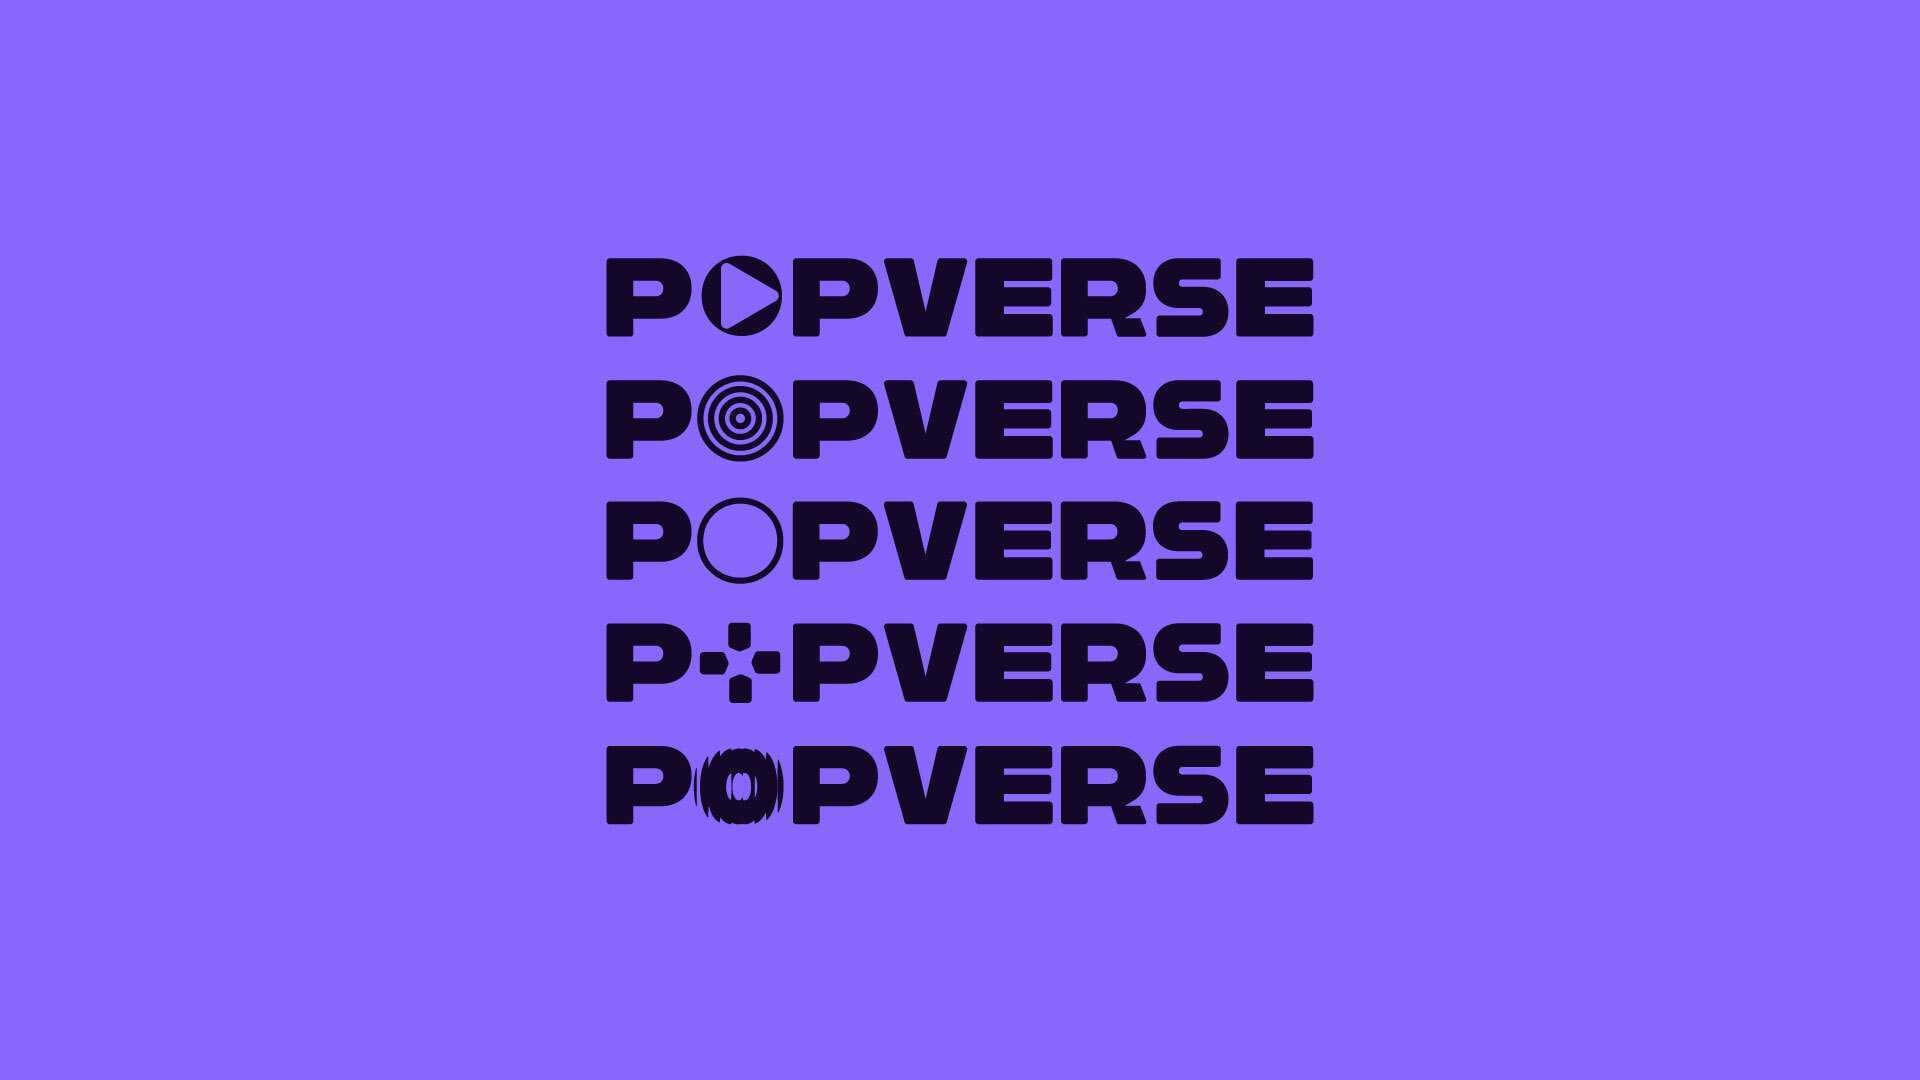 Introducing Popverse, ReedPop’s new pop culture site